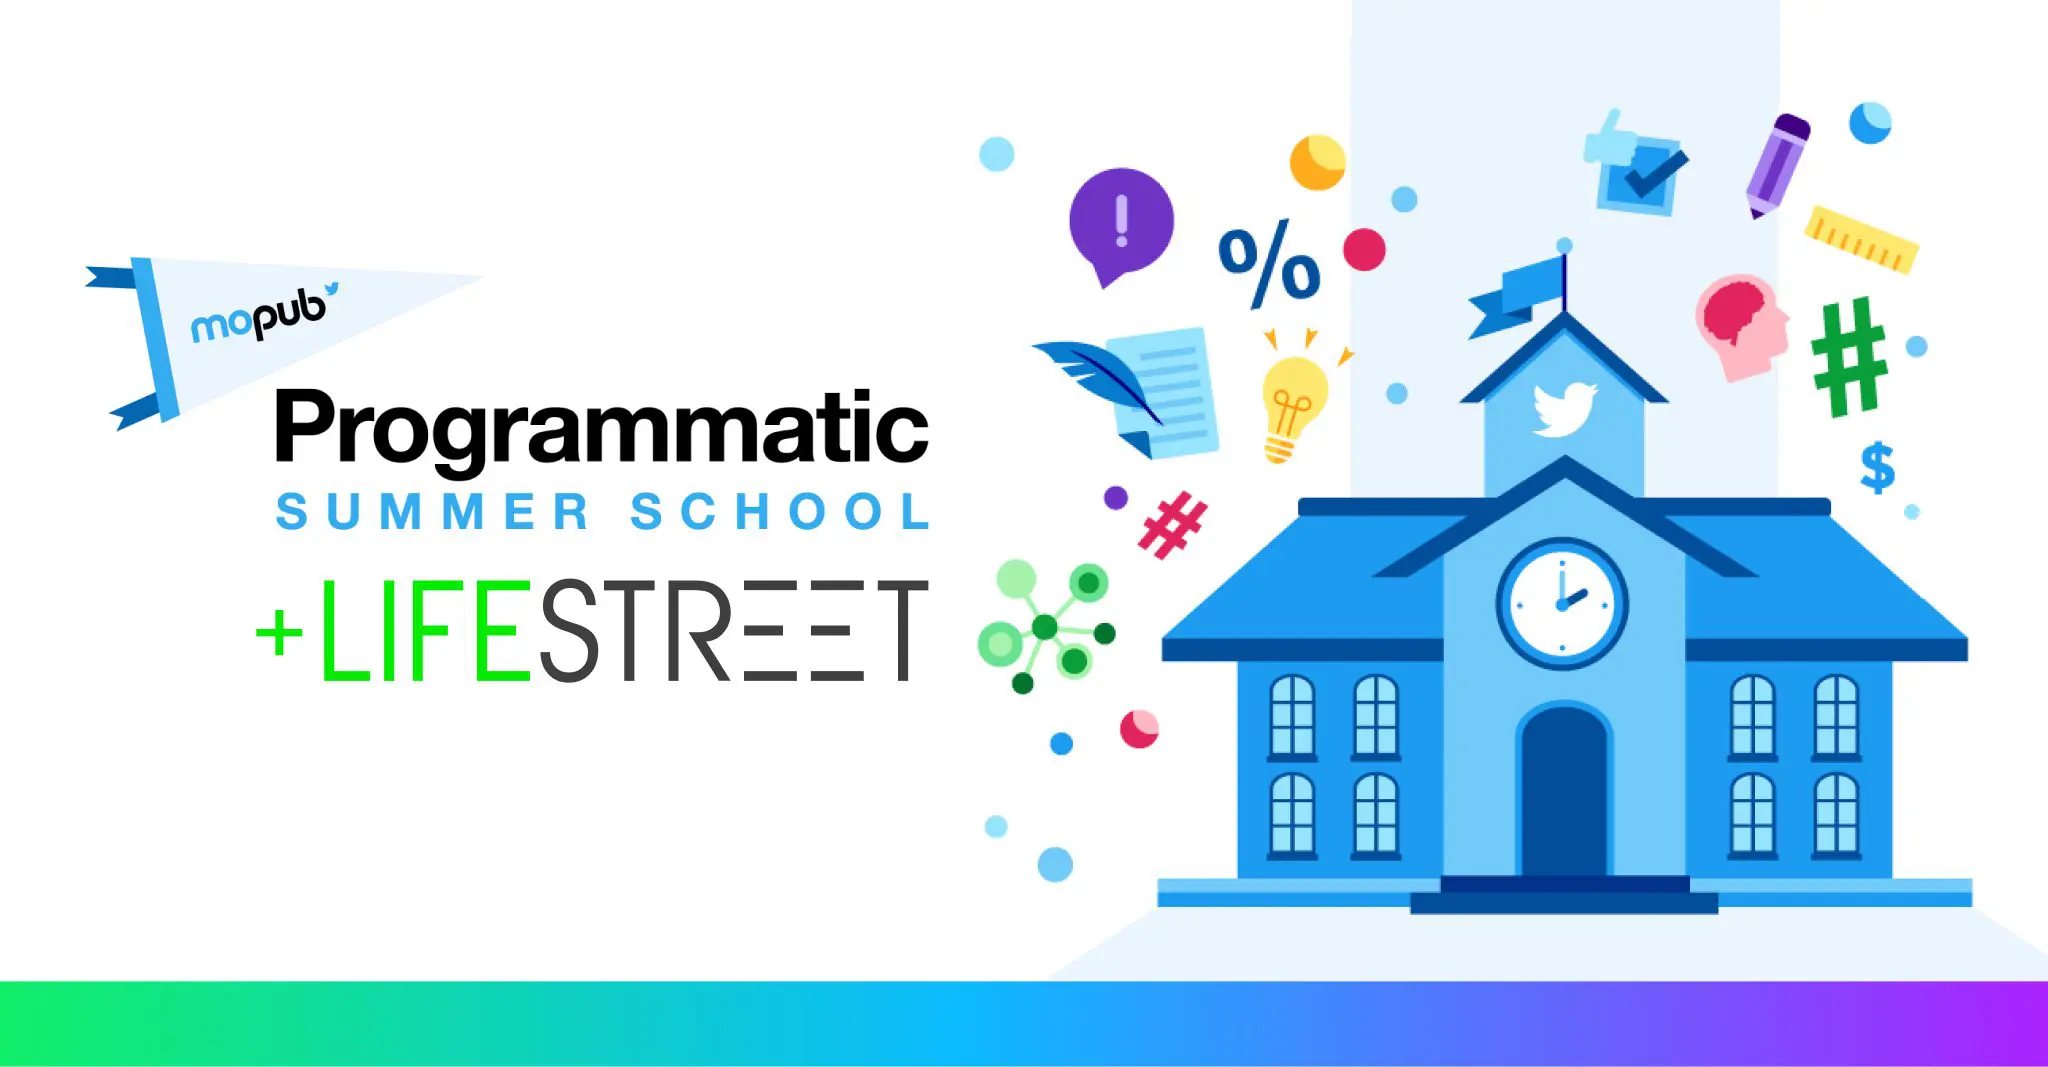 Webinar for MoPub's programmatic summer school + LifeStreet